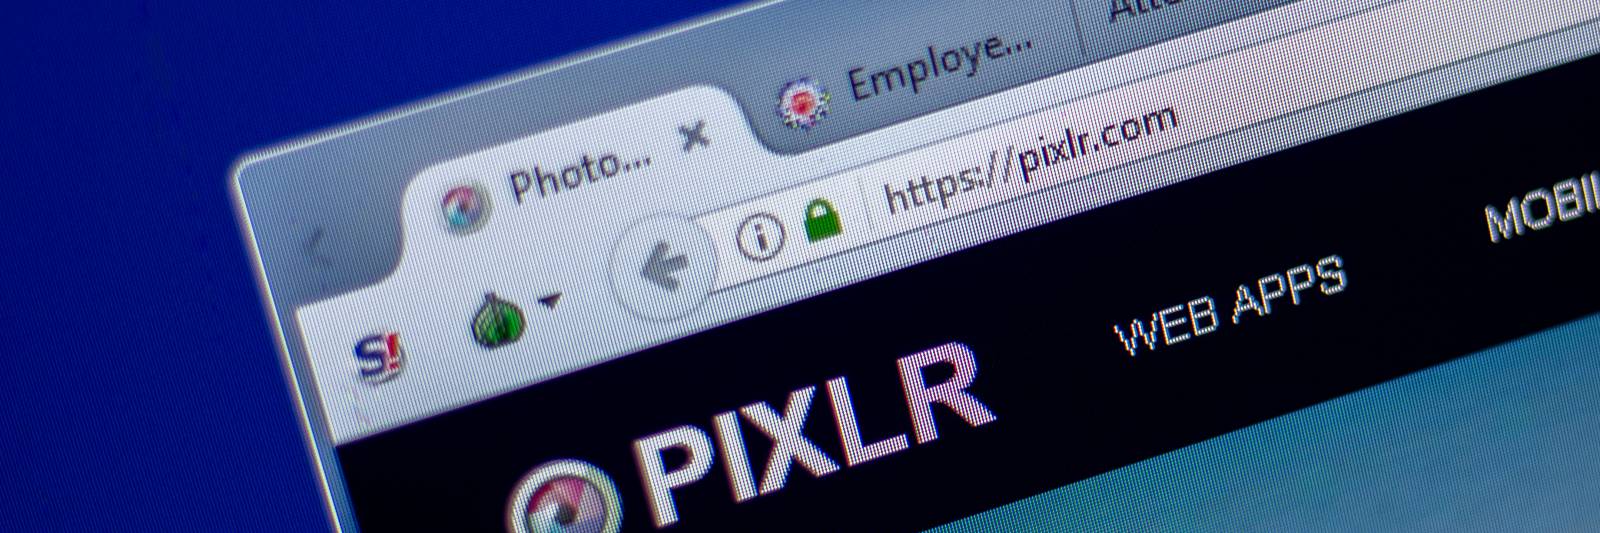 Pixlr Data Breach Exposes Over 1.9 Million User Records